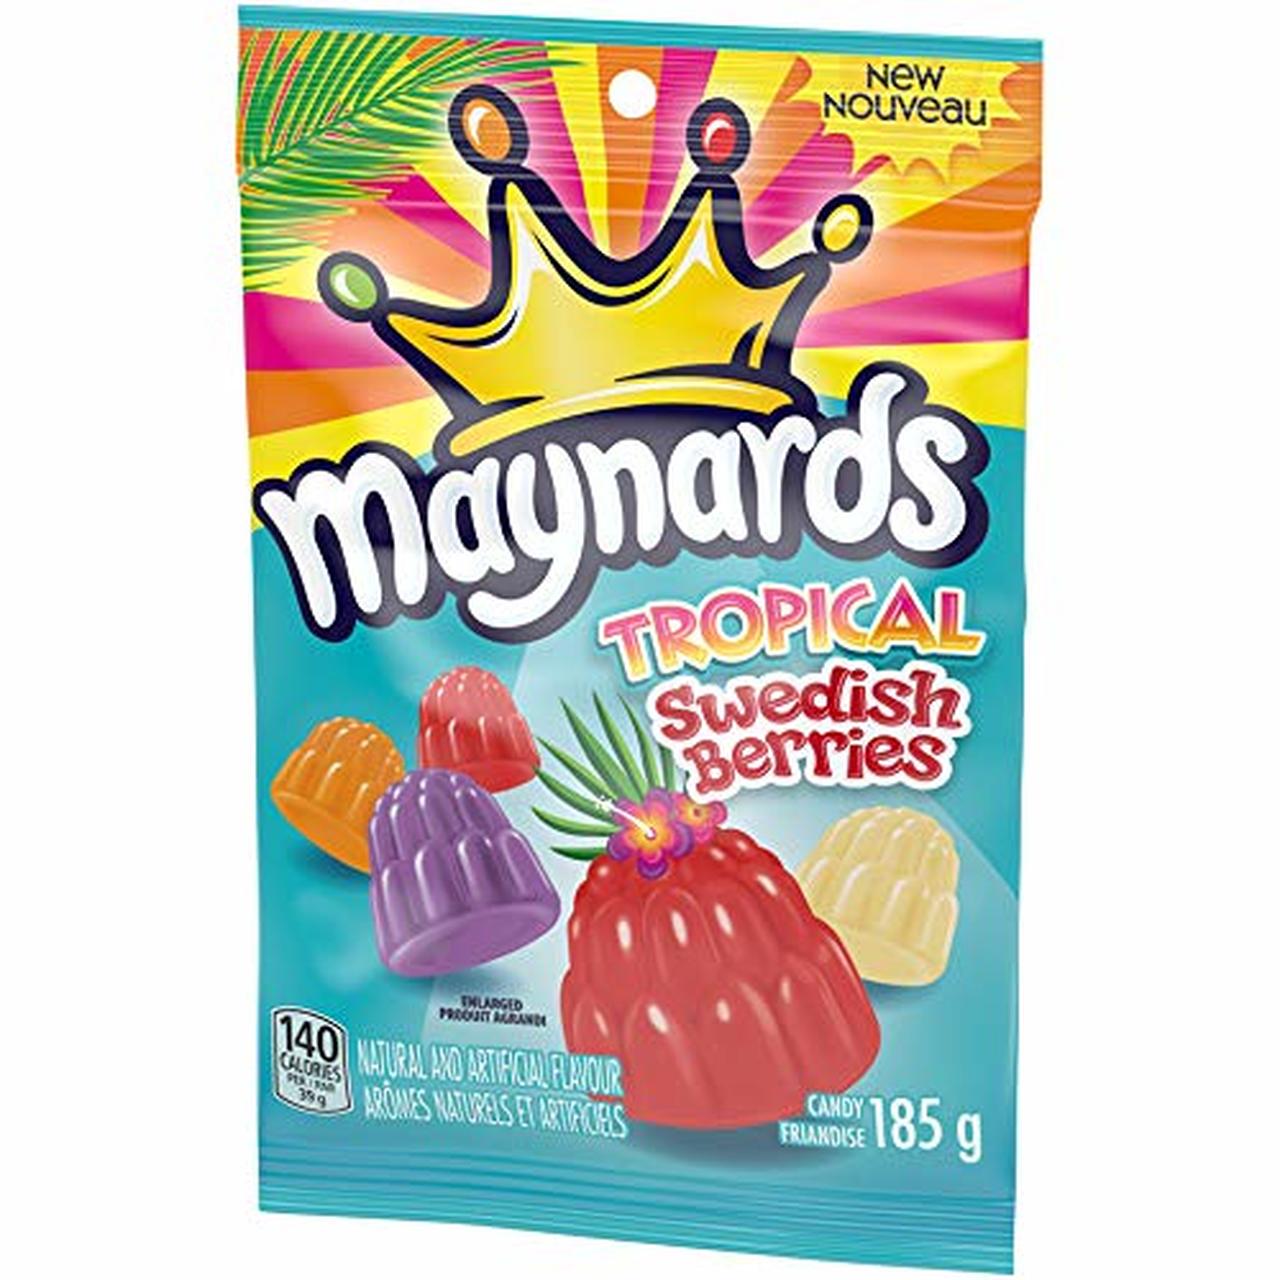 Maynards - Tropical Swedish Berries